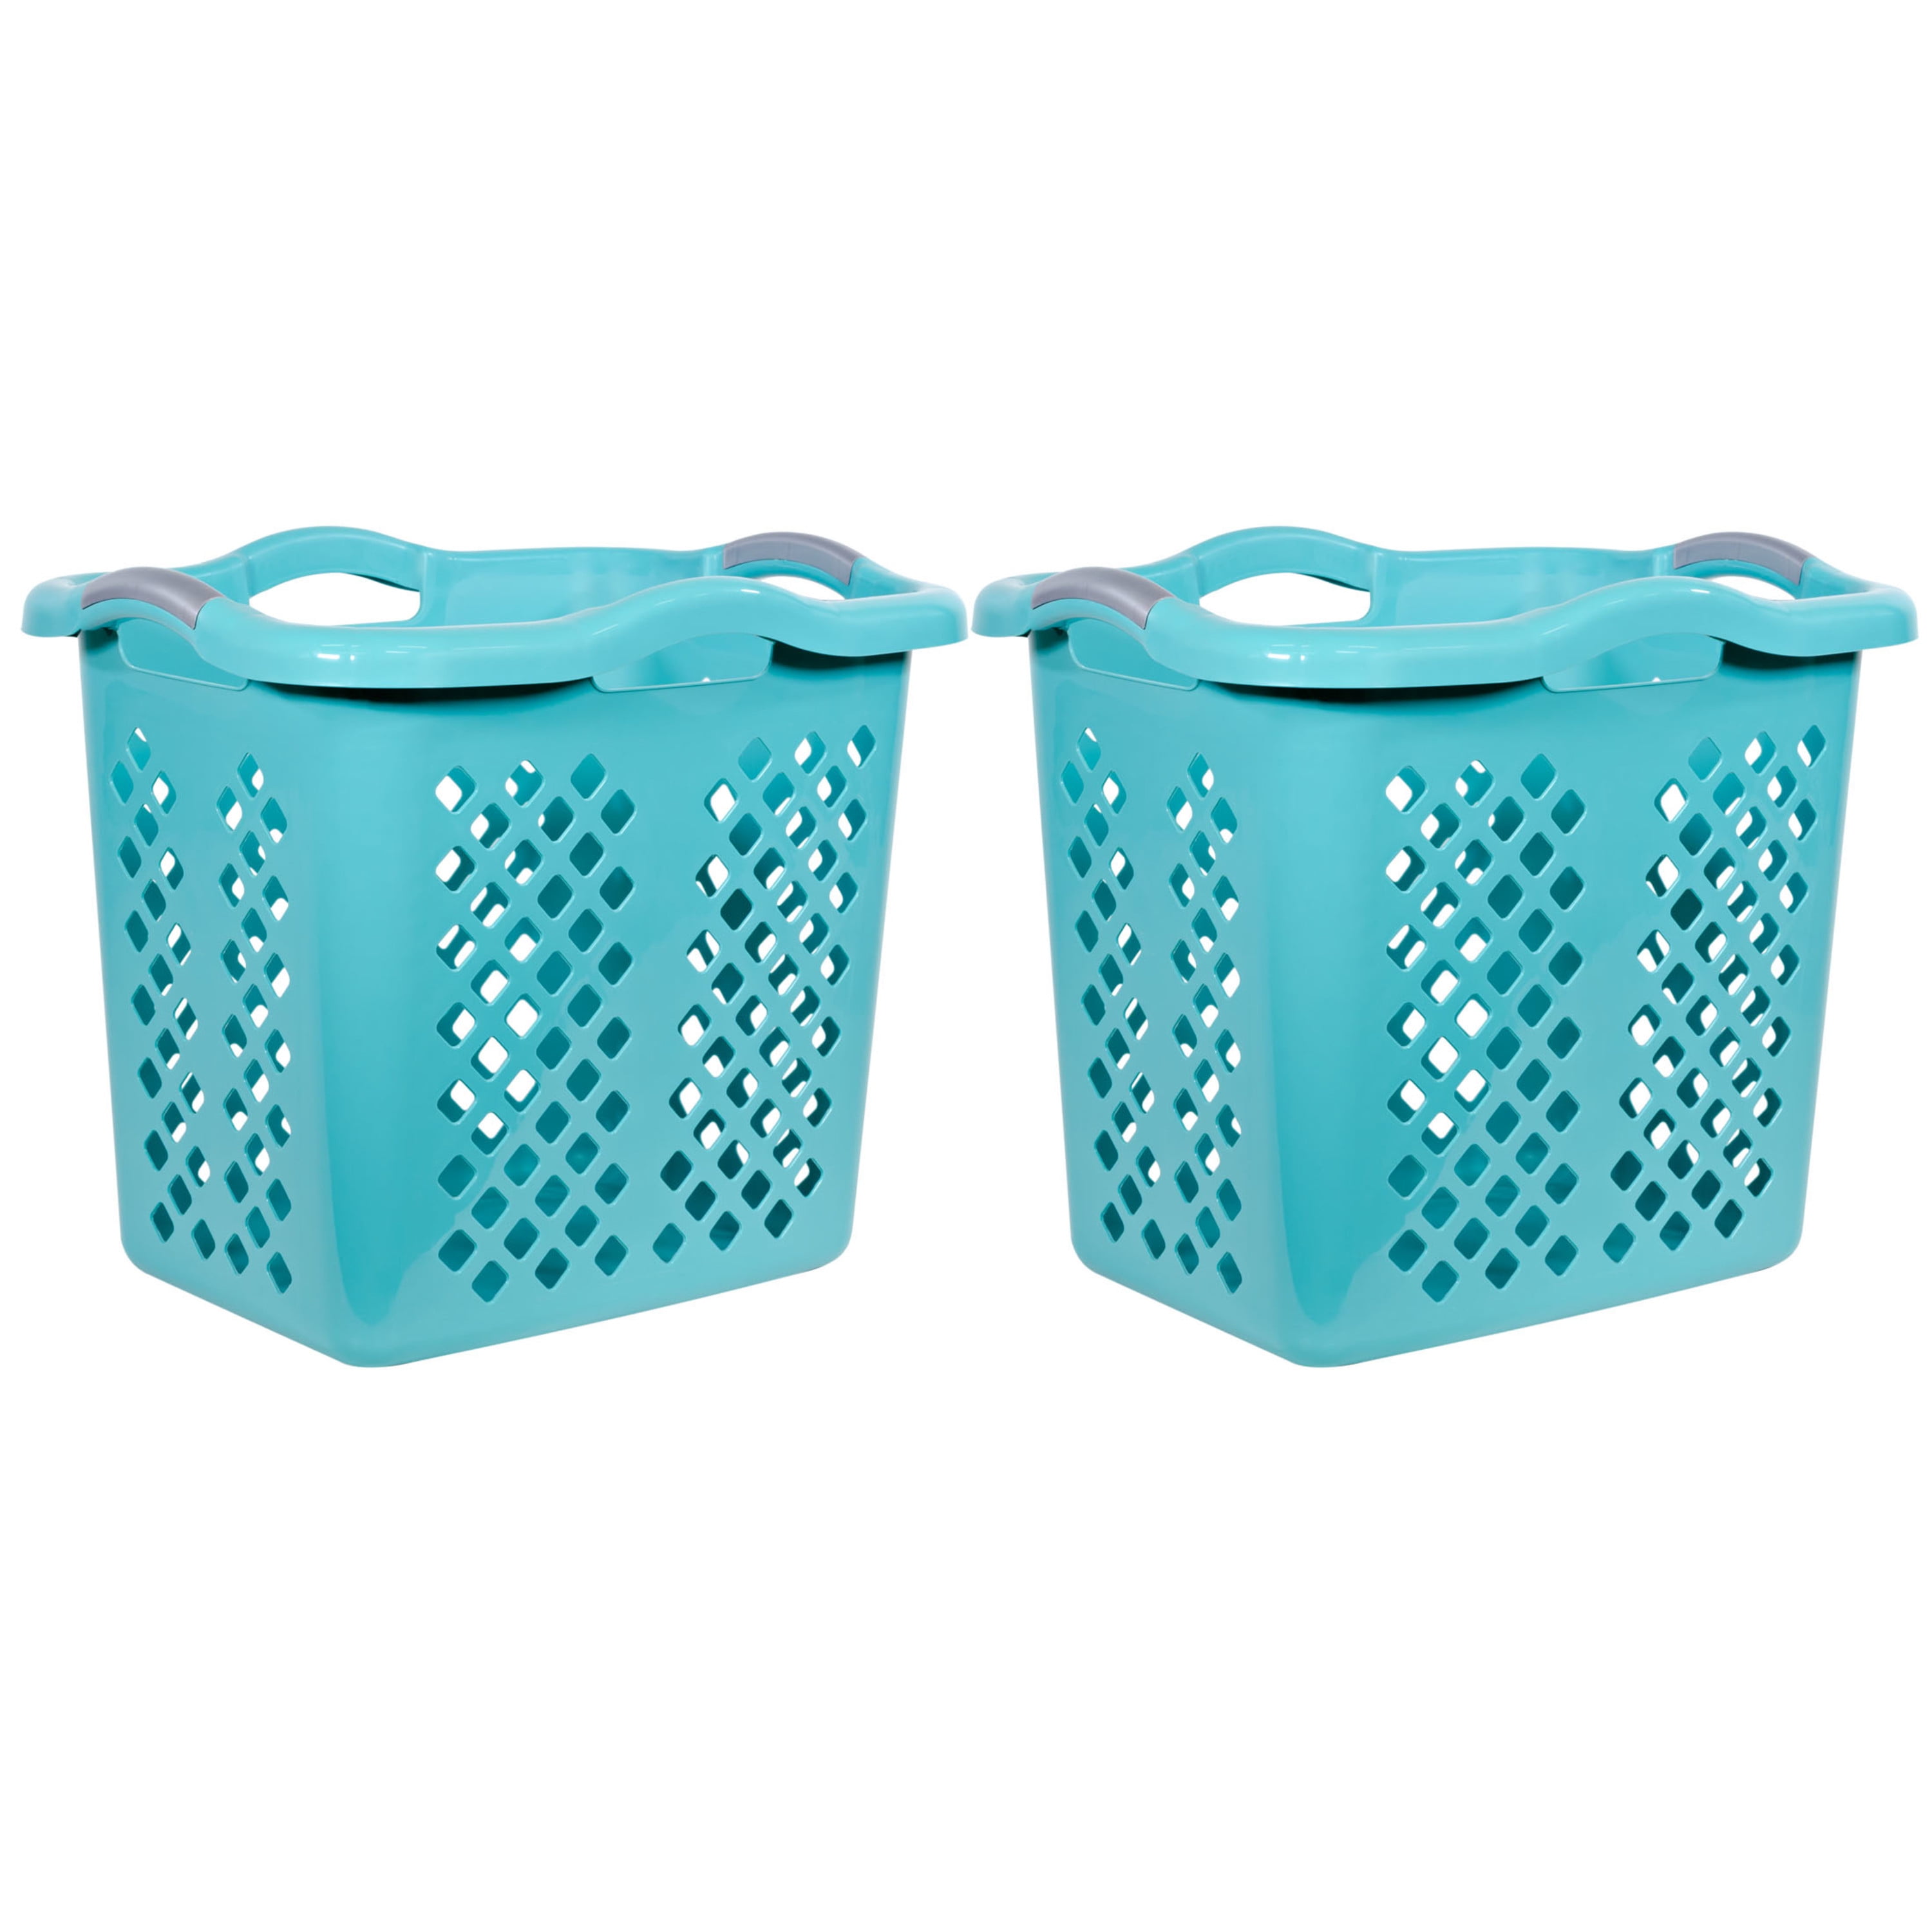 Plastic basket, Plastic baskets, Brush Series, Broom series, Children  products, Washing Bash